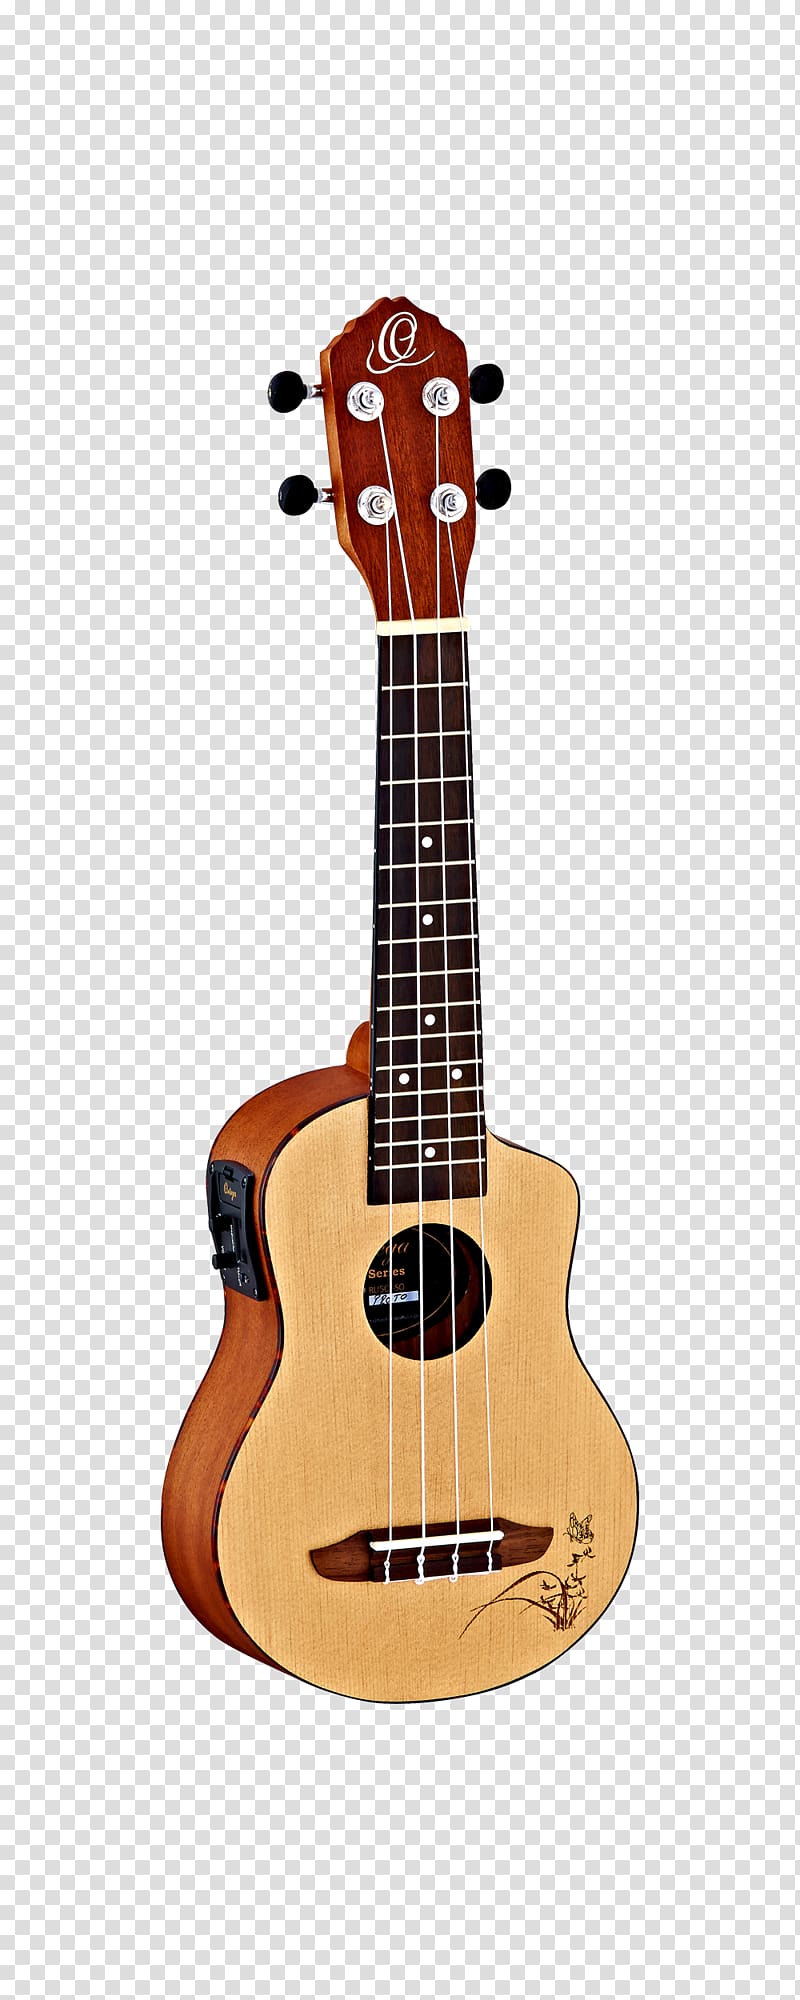 Ukulele Flamenco guitar Musical Instruments, amancio ortega transparent background PNG clipart